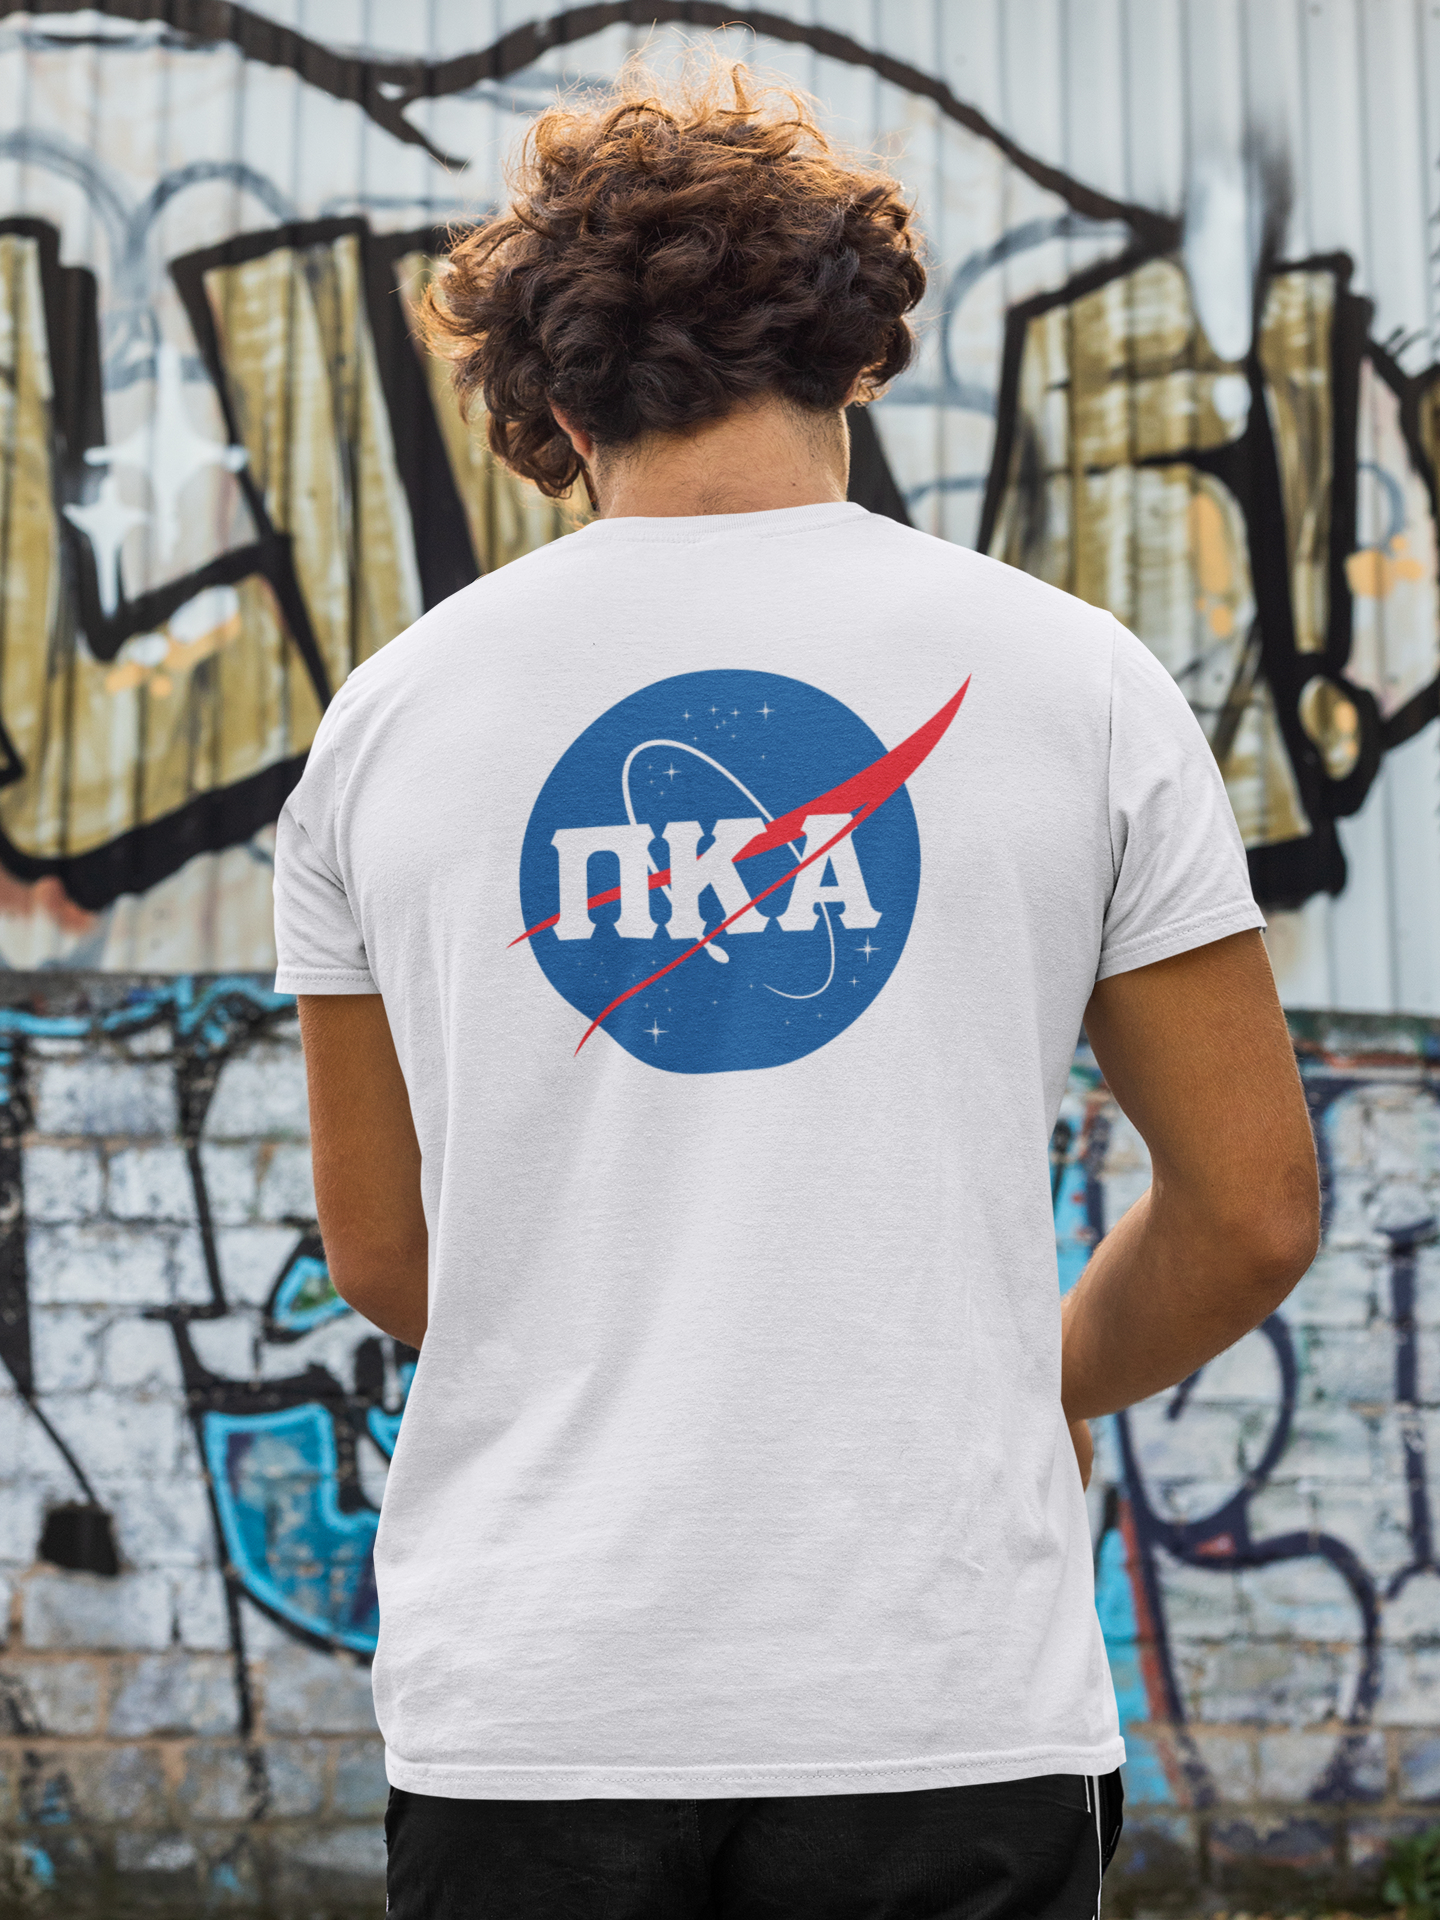 Pi Kappa Alpha Graphic T-Shirt | Nasa 2.0 | Pi kappa alpha fraternity shirt back model 